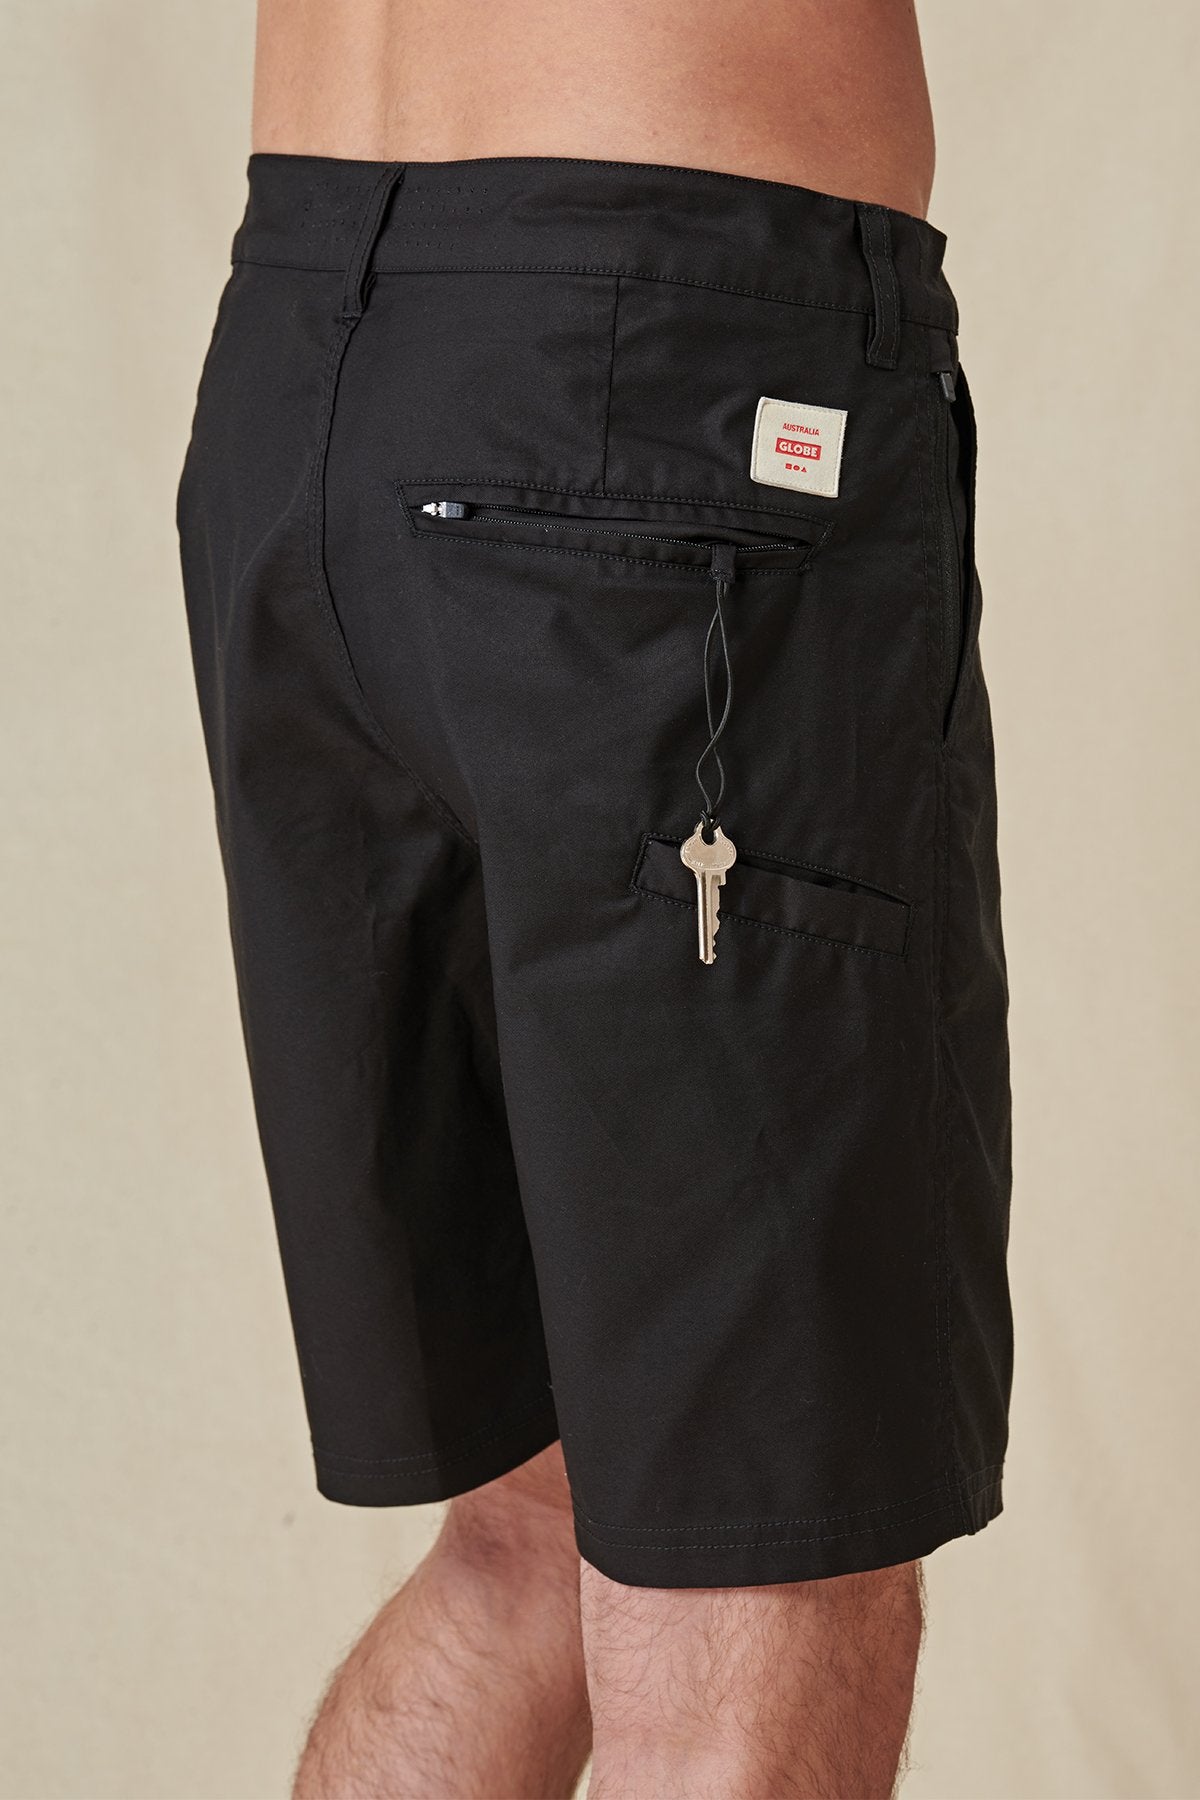 back pocket profile of Black Any Wear short